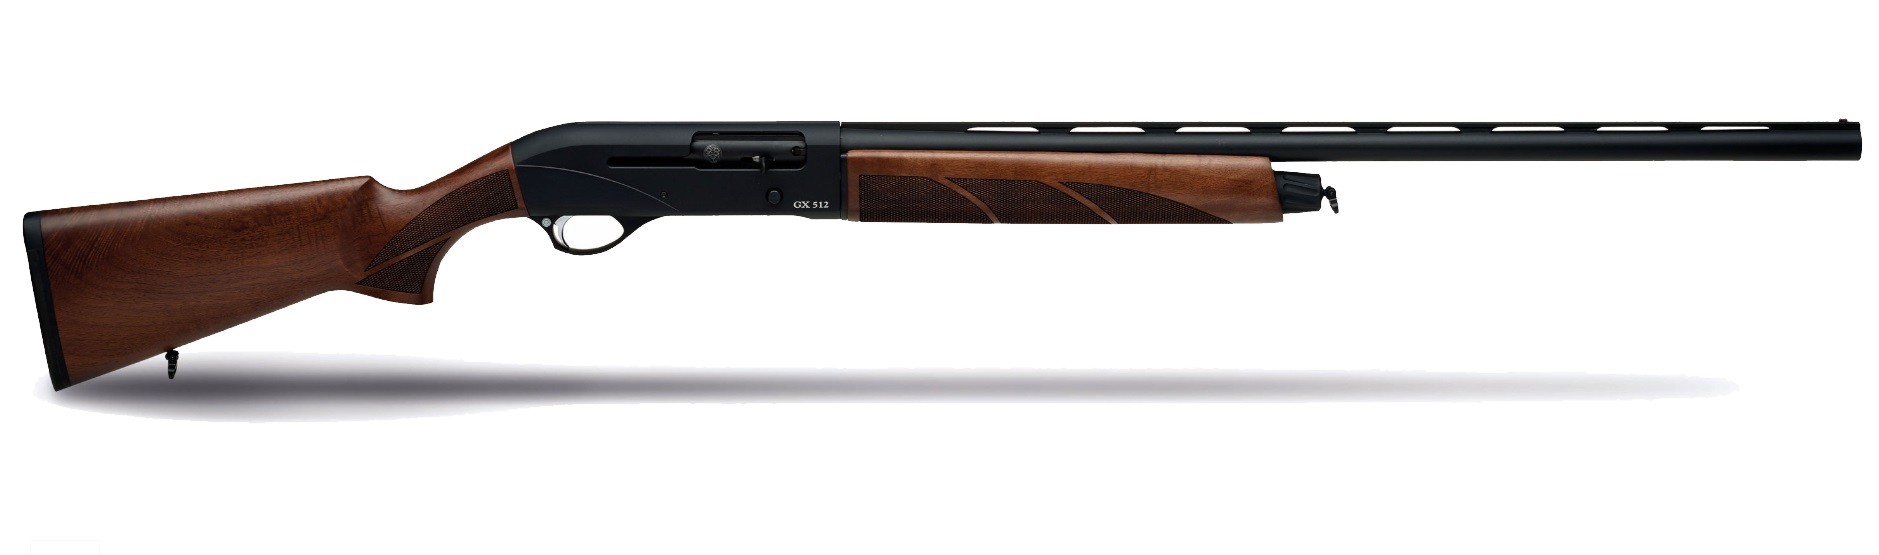 Ружье Huglu GX 512 Wood Black 12х76 760мм - фото 1